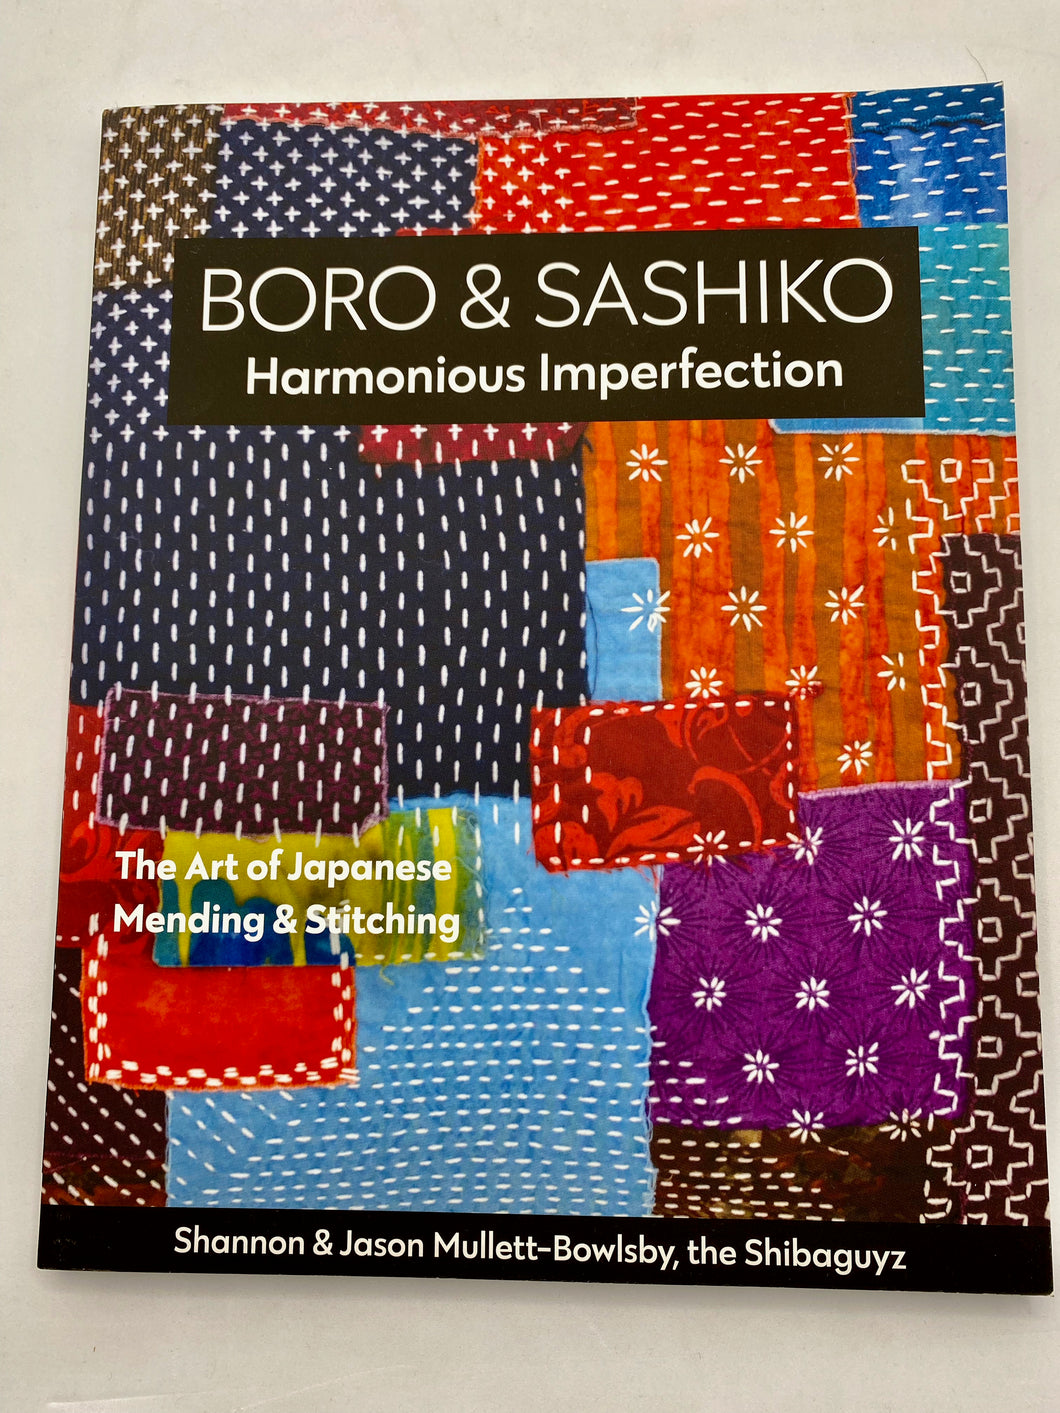 Boro & Sashiko Harmonious Imperfection by Shannon & Jason Mullett-Bowlsby, the Shibaguyz